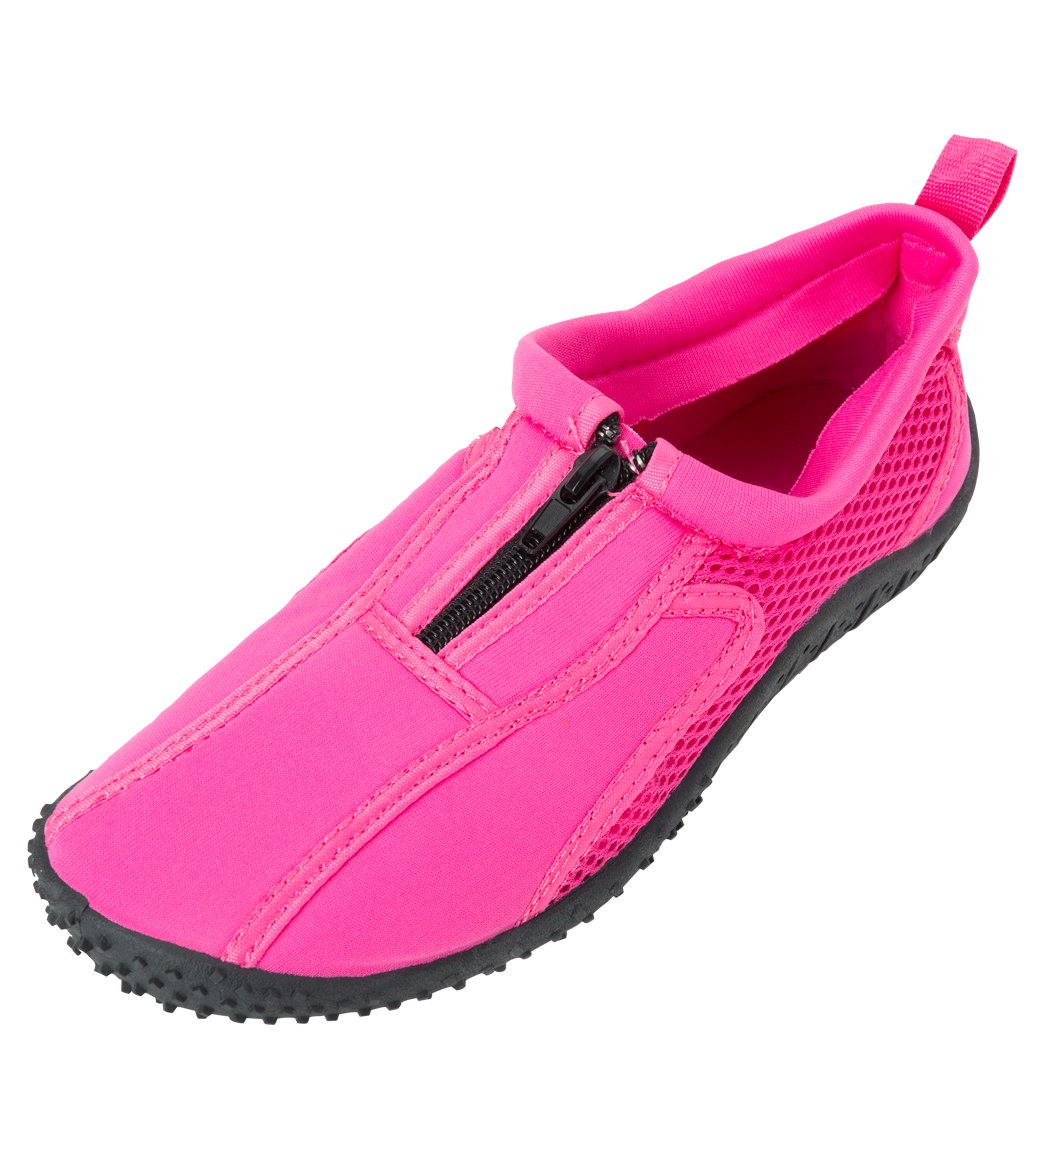 Rockin Footwear Women's Aqua Neon Zipper Water Shoes at SwimOutlet.com